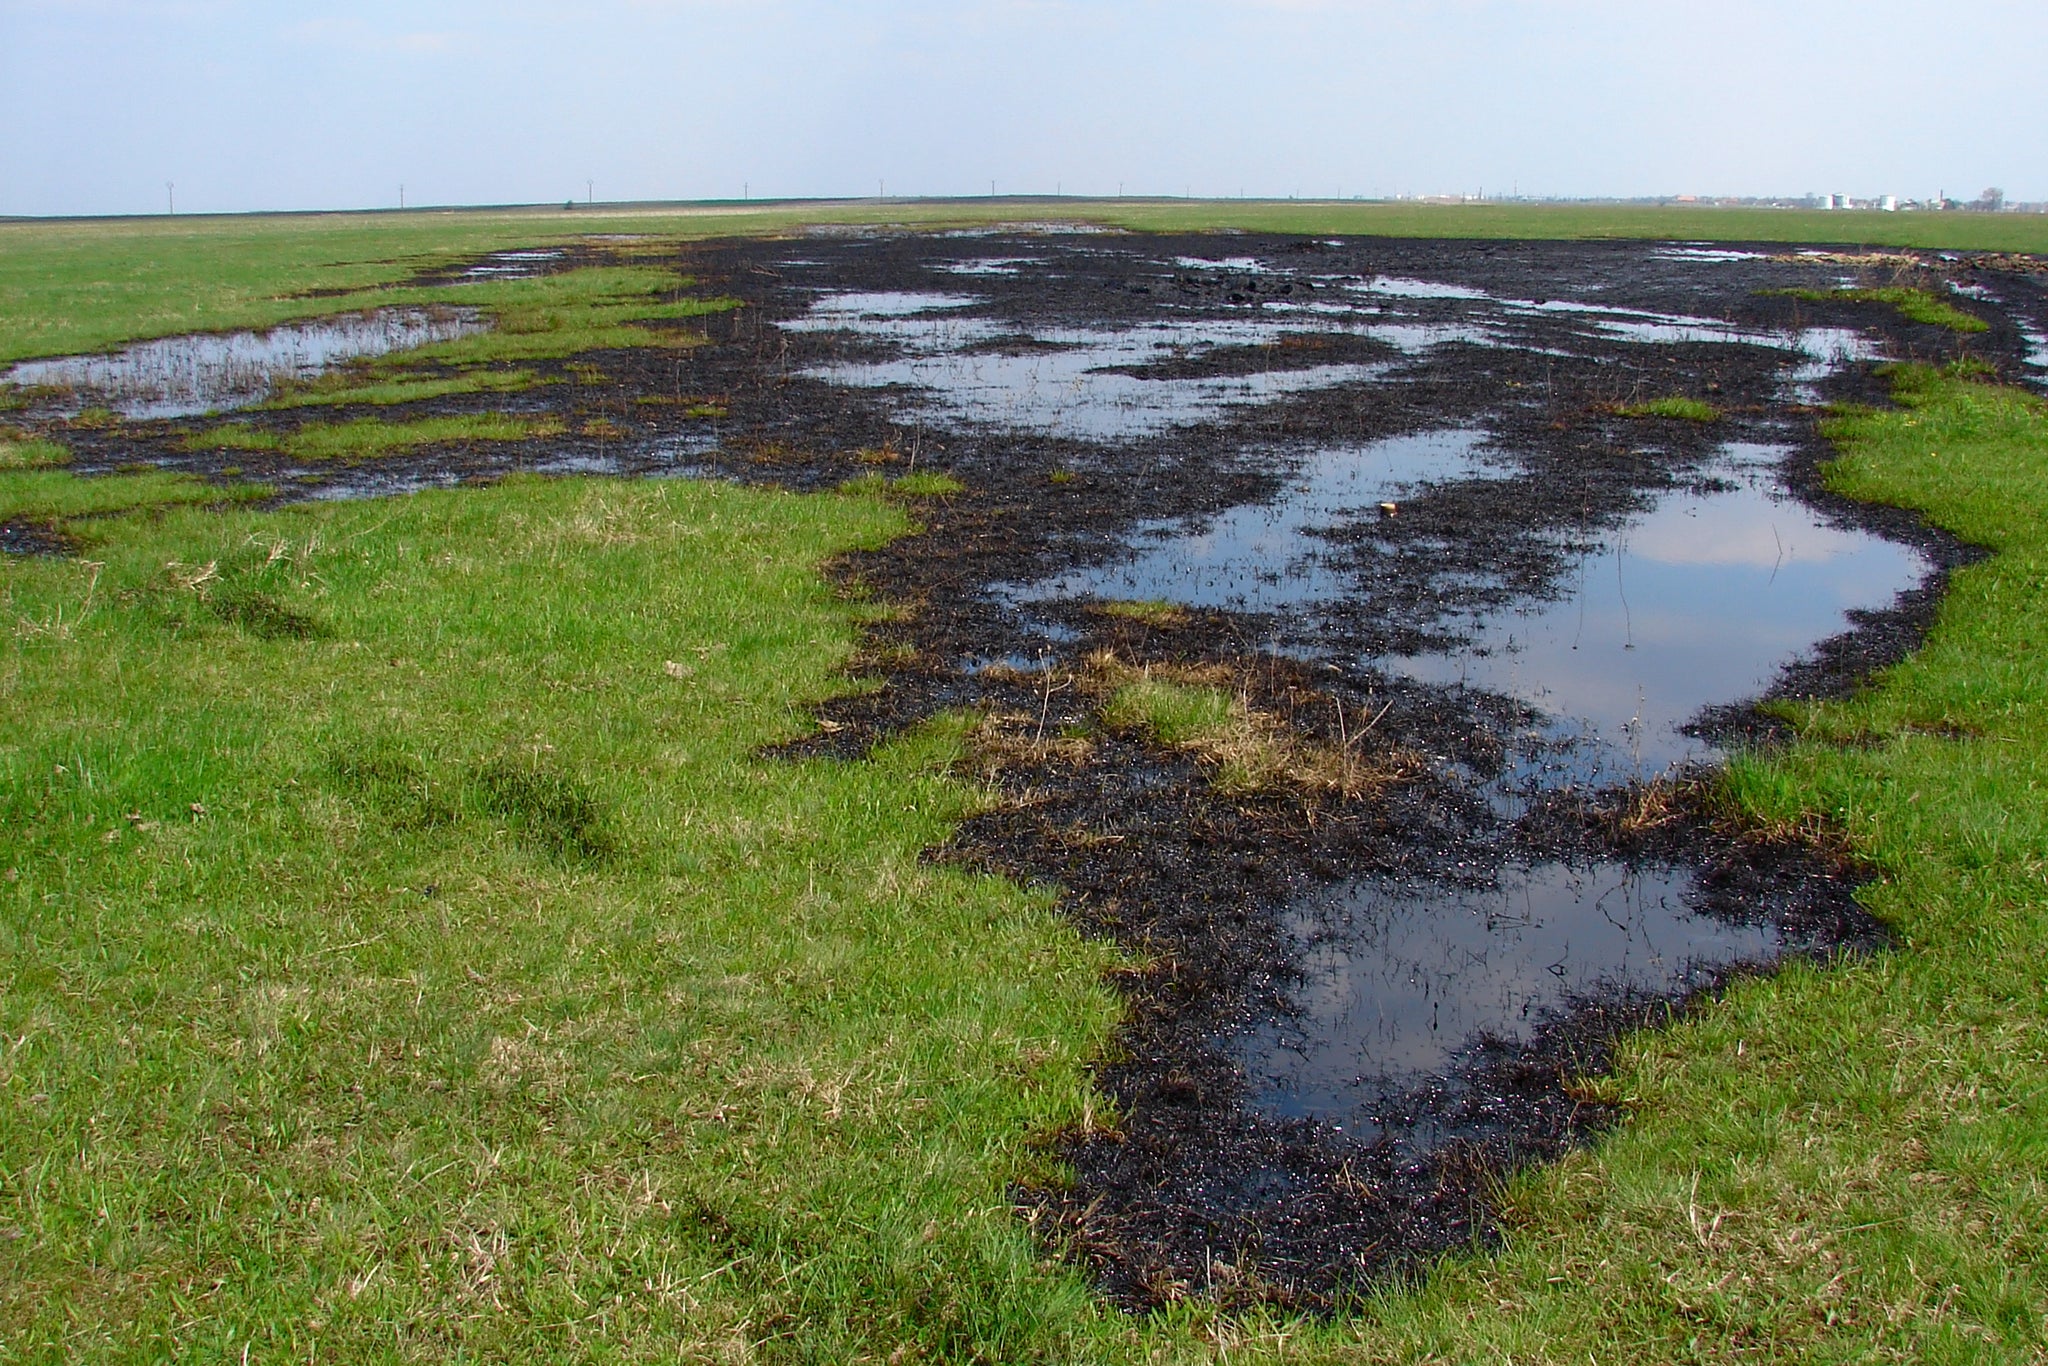 Petroleum oil spill in green fields that need bioremediation